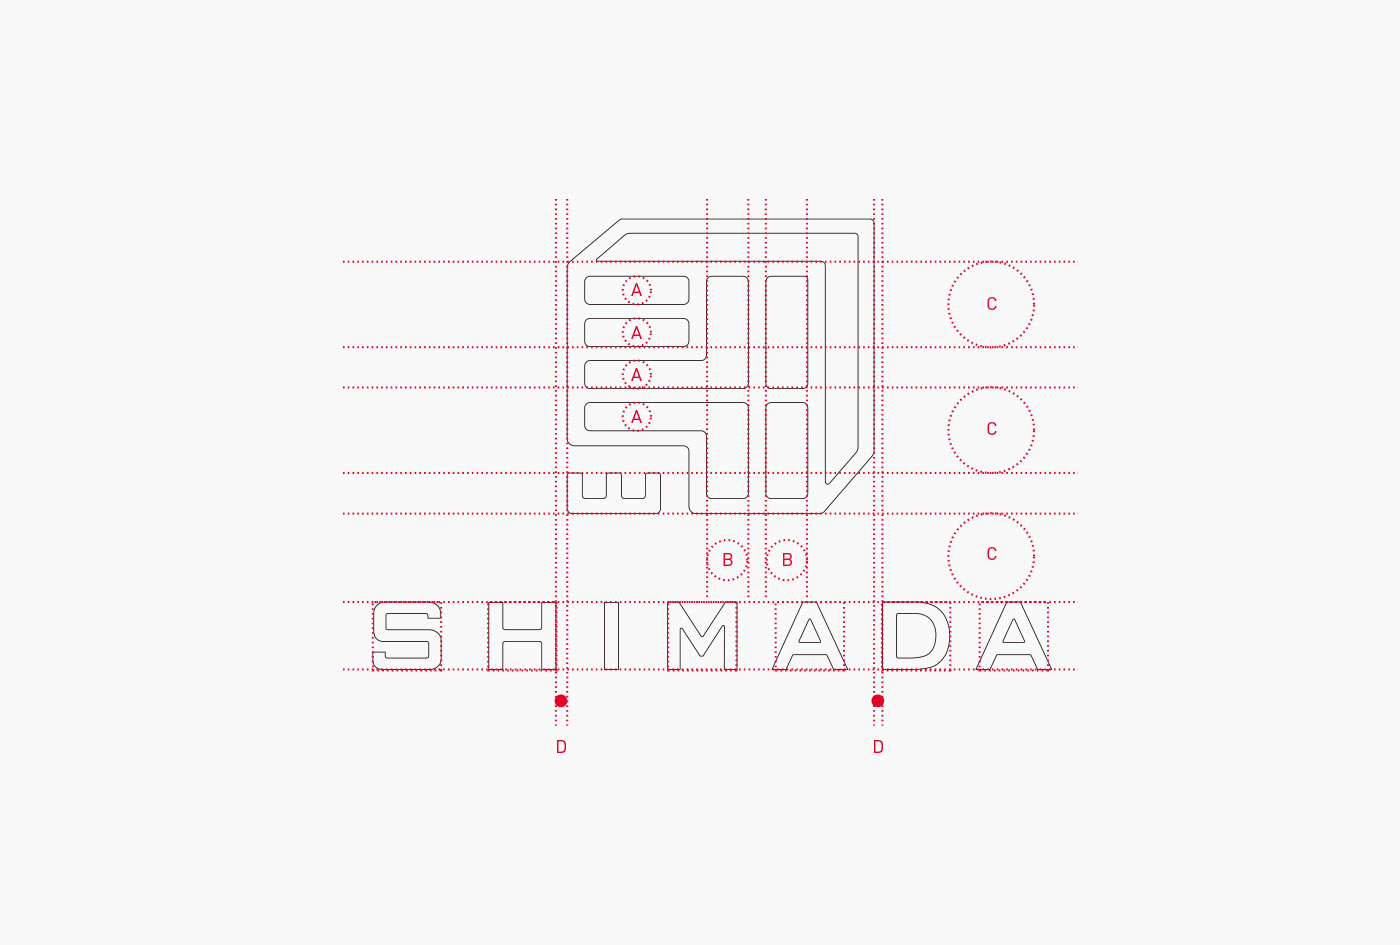 Shimada Co. Ltd Brand Identity Spotlight